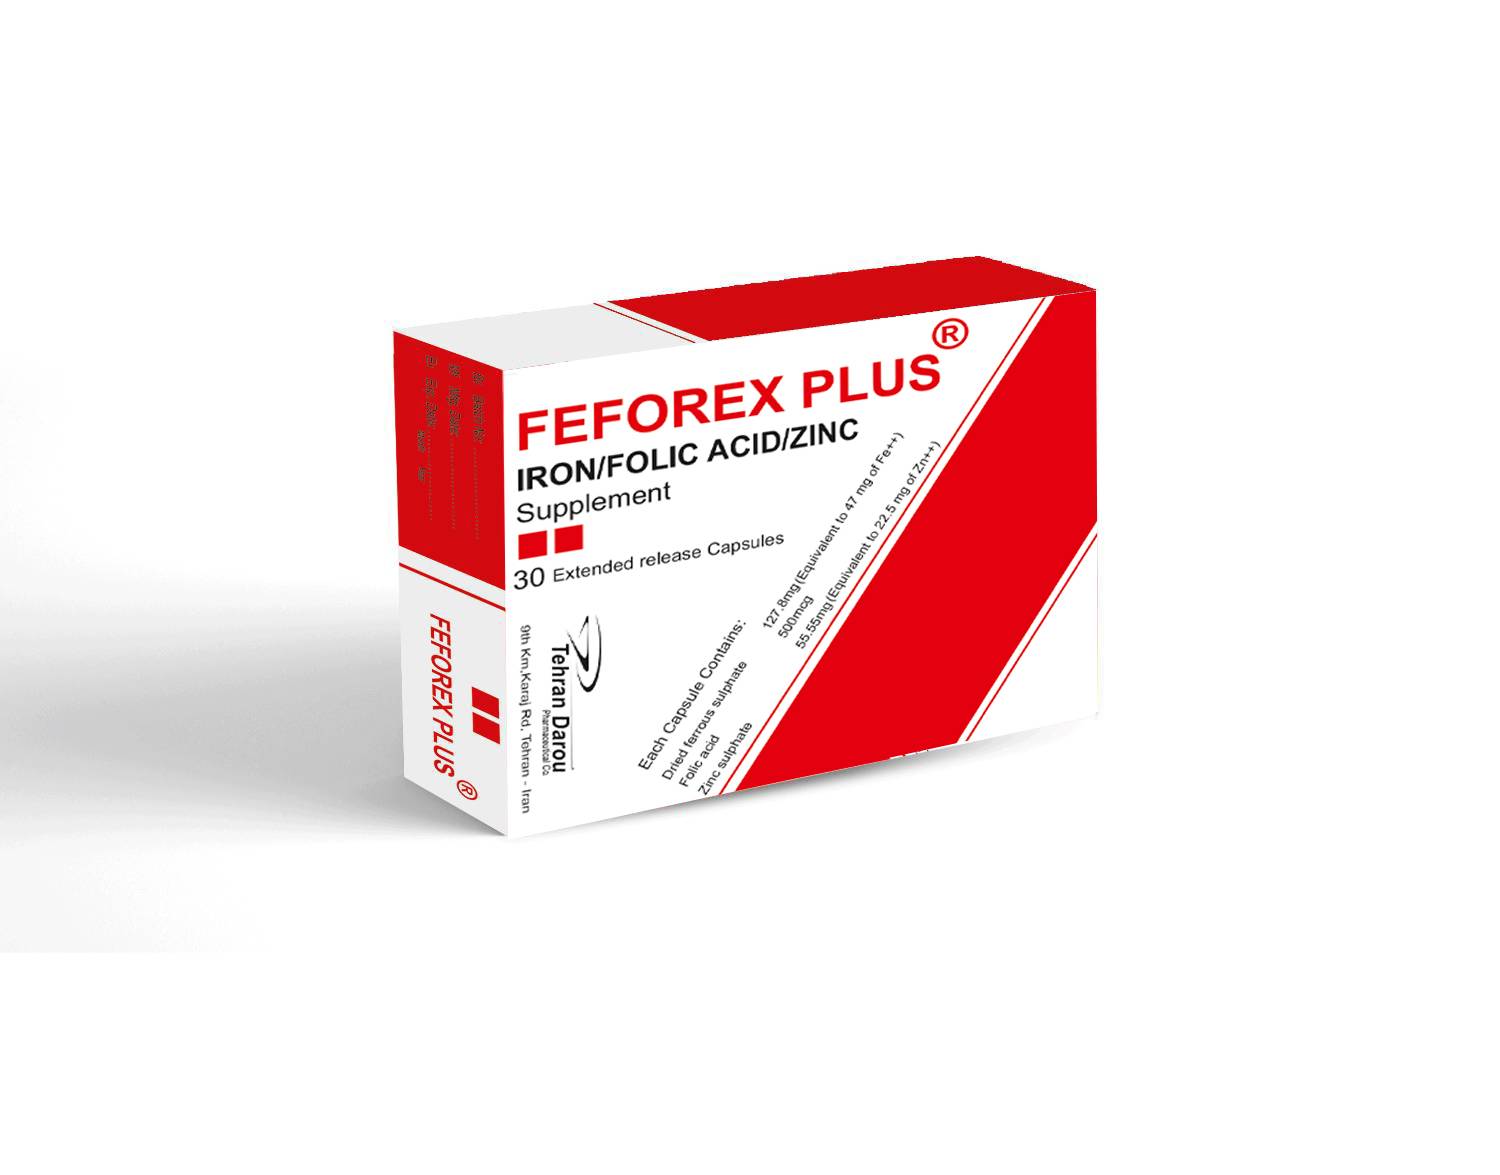 Feforex Plus